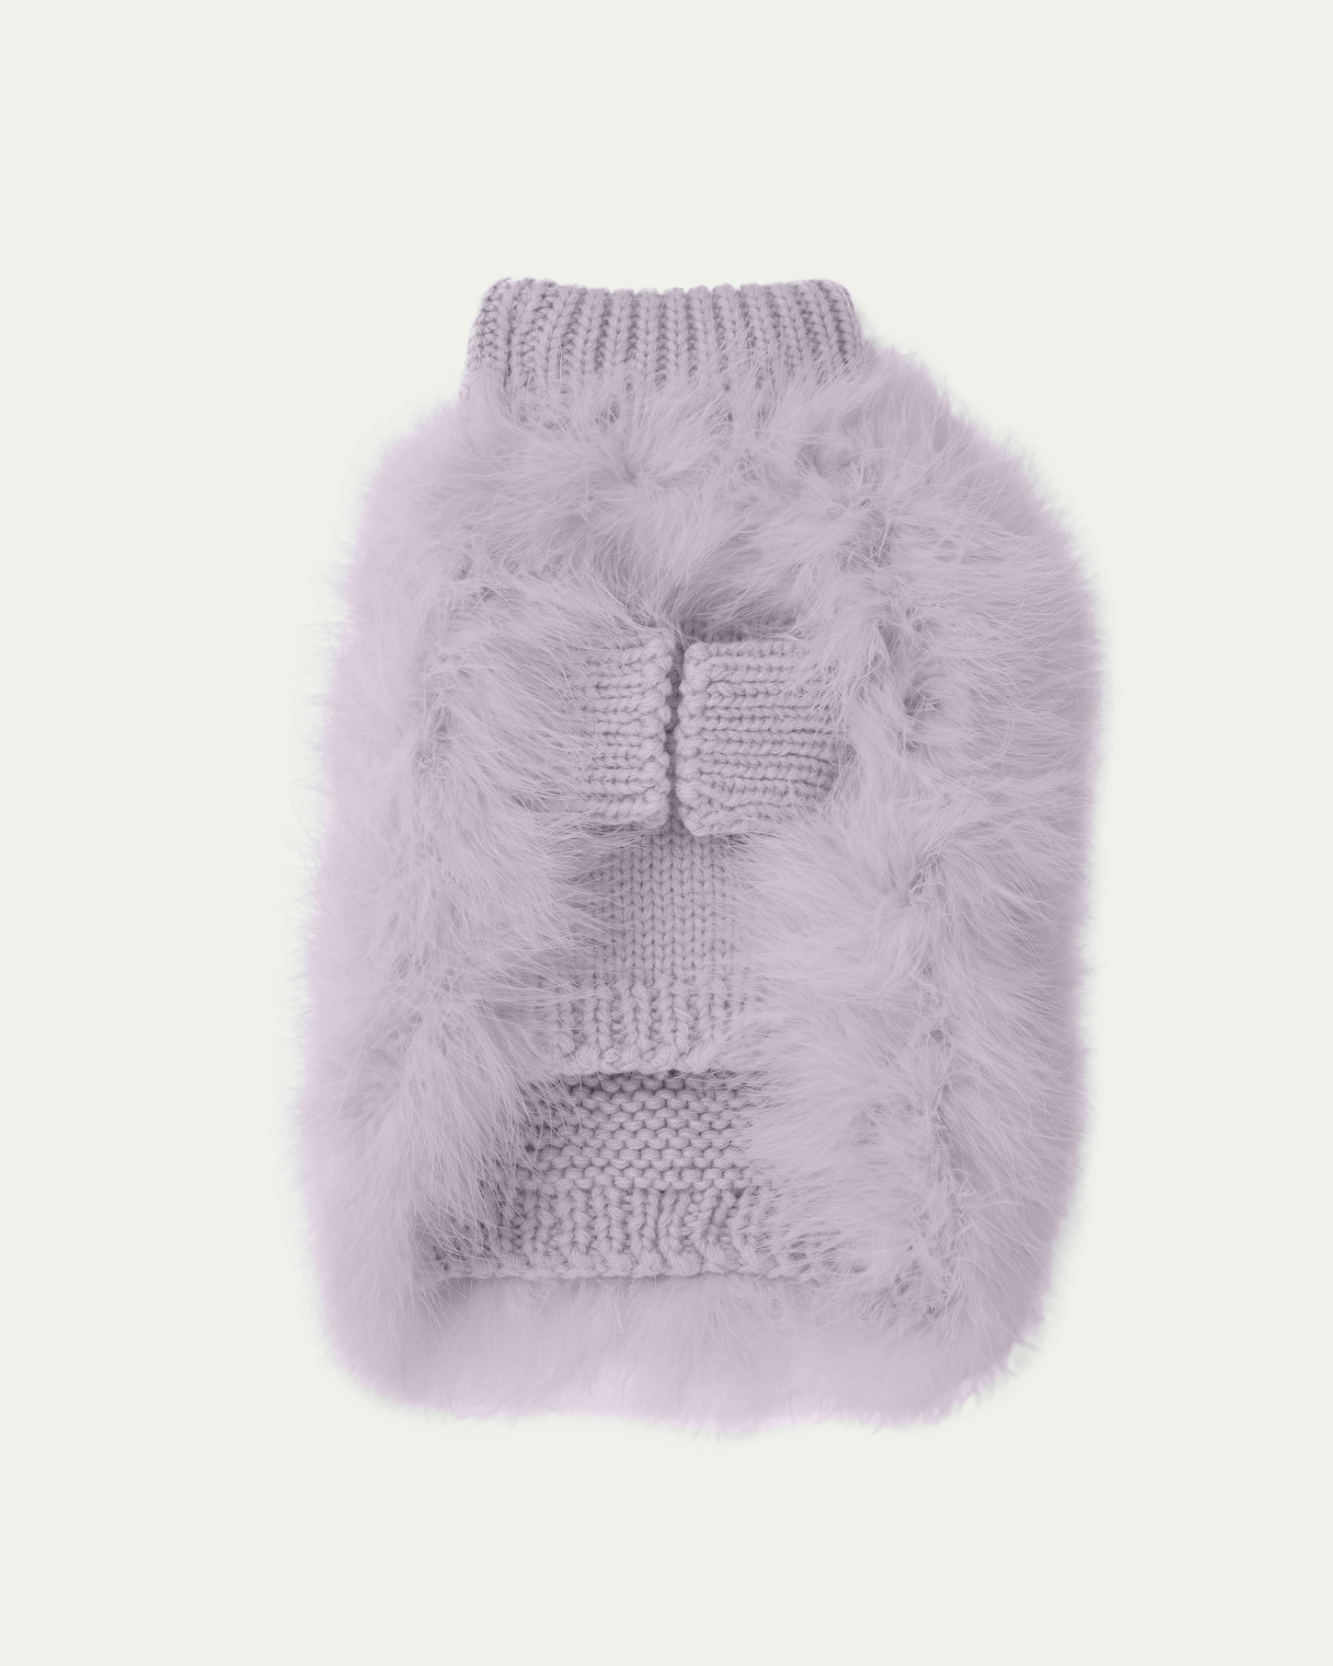 Christian Cowan x Maxbone Sweater - Lavender